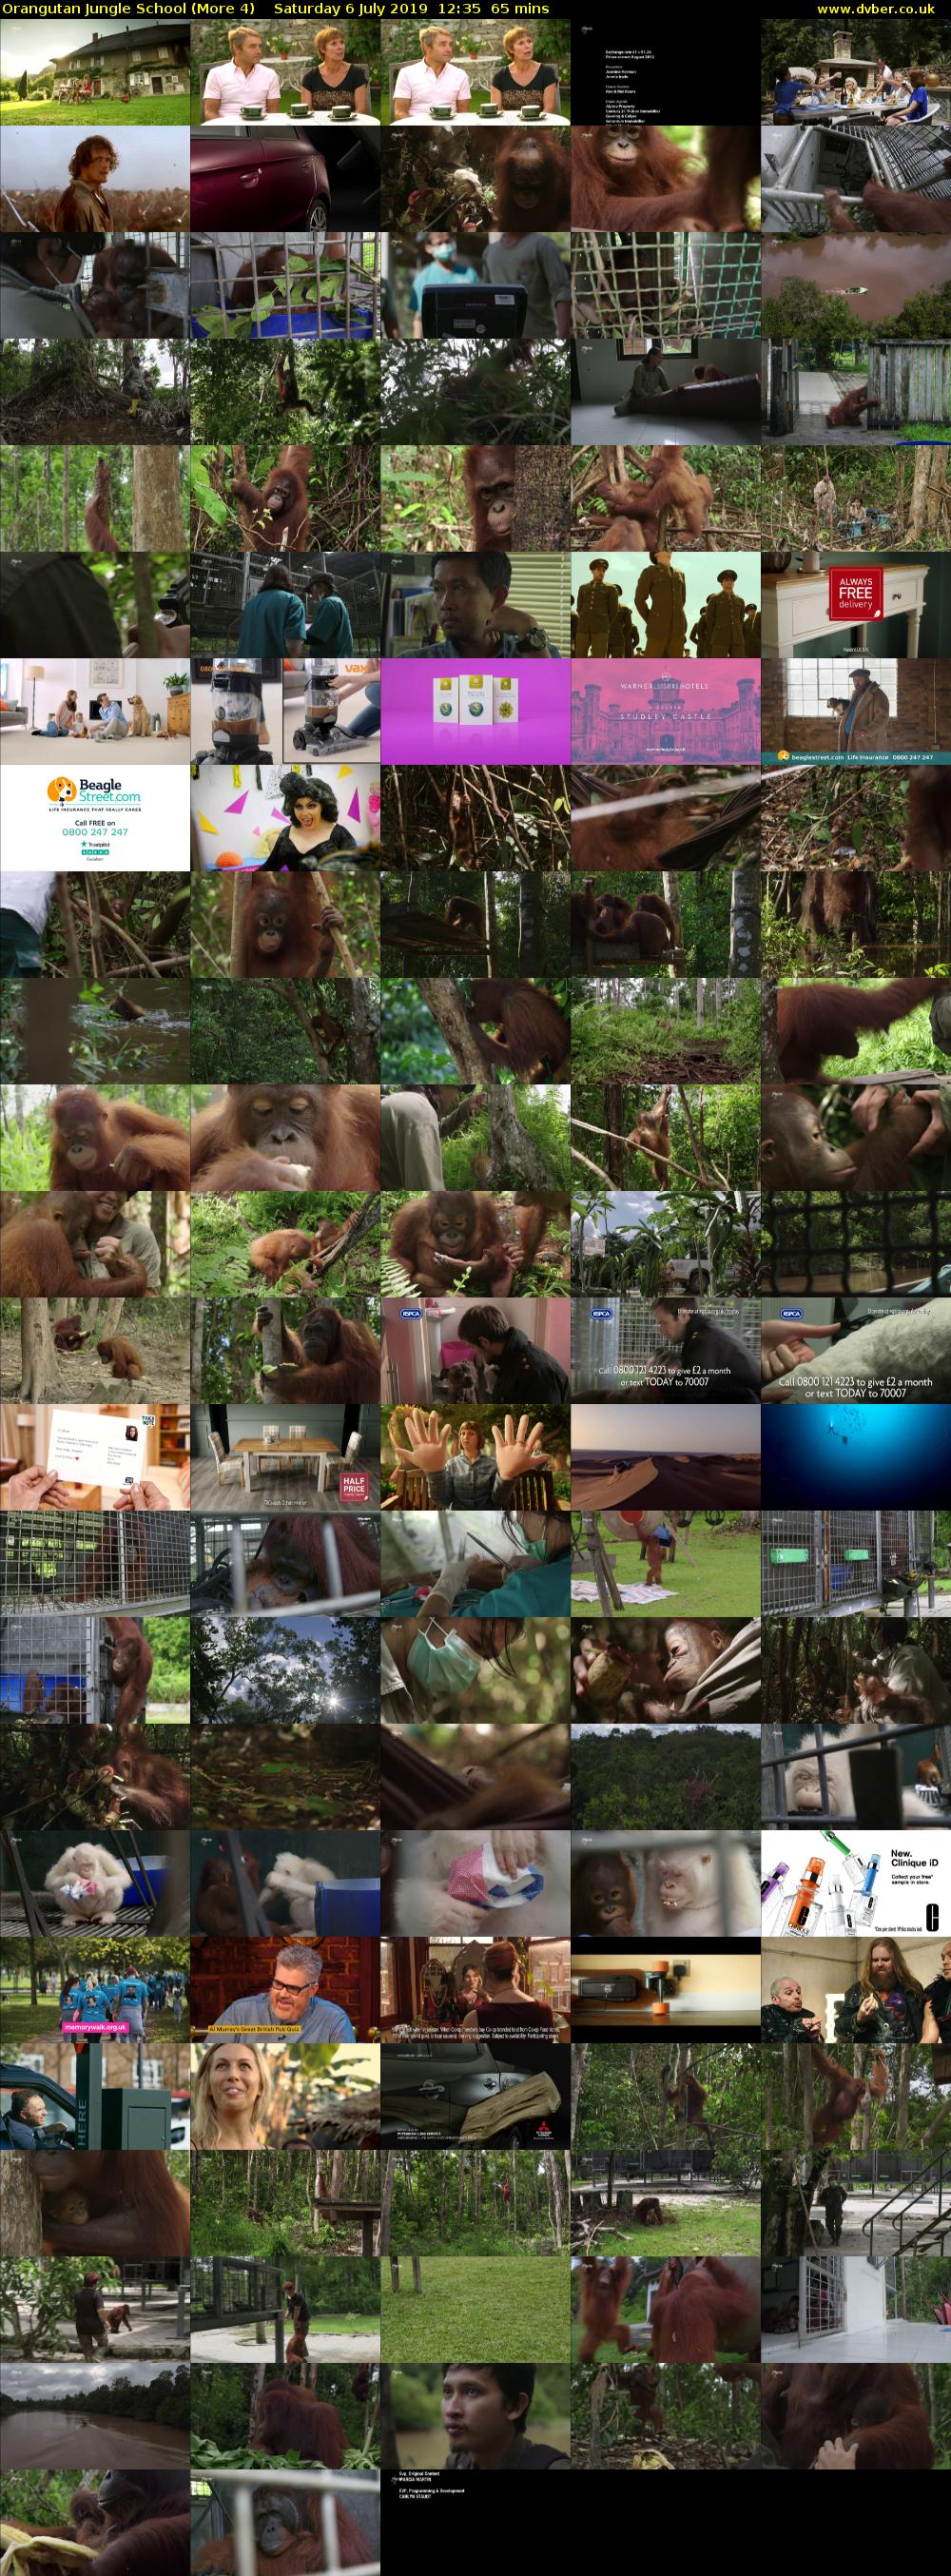 Orangutan Jungle School (More 4) Saturday 6 July 2019 12:35 - 13:40